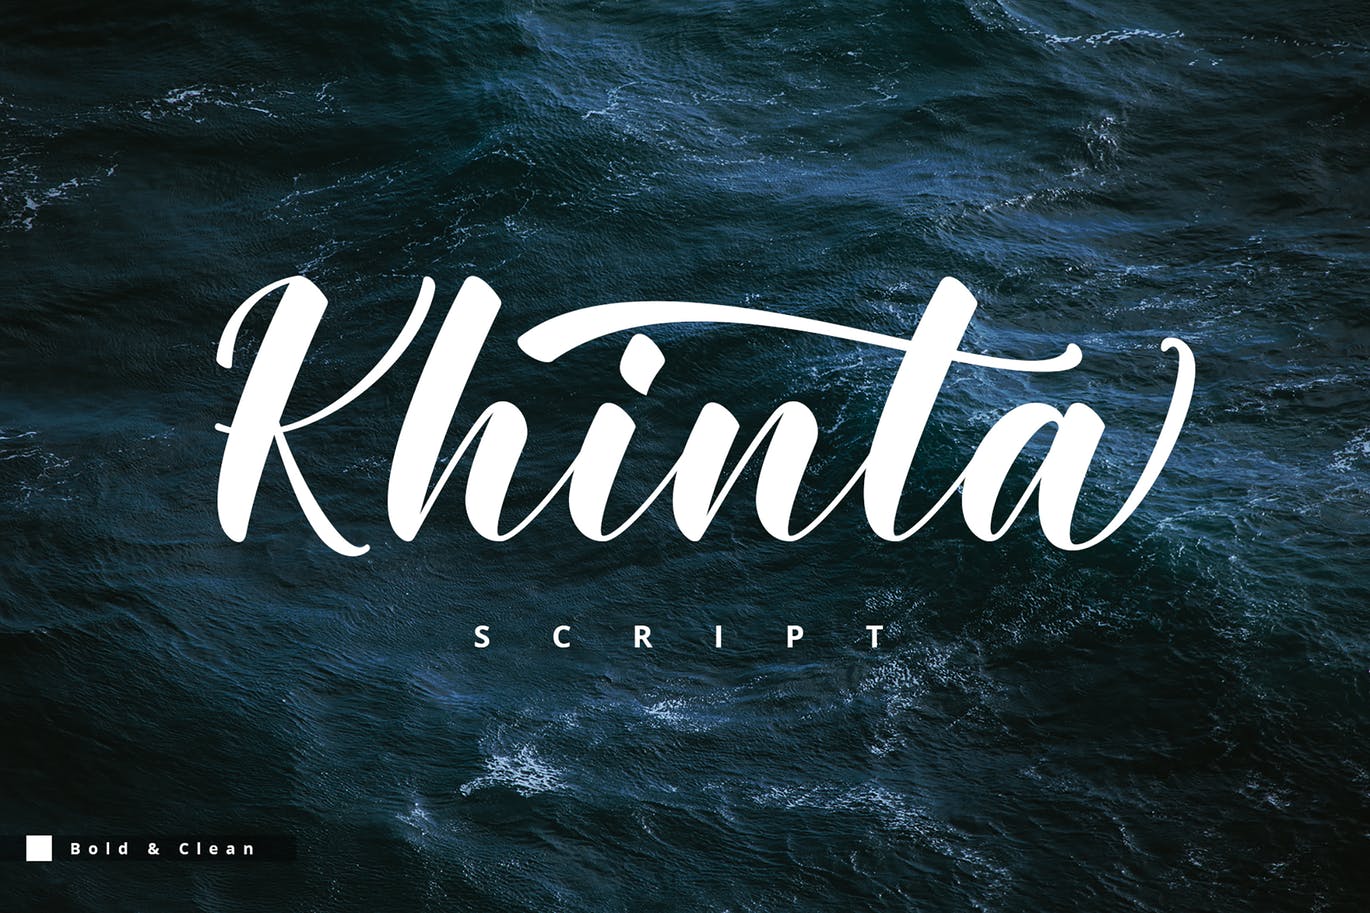 Khinta Script font for typographic logos